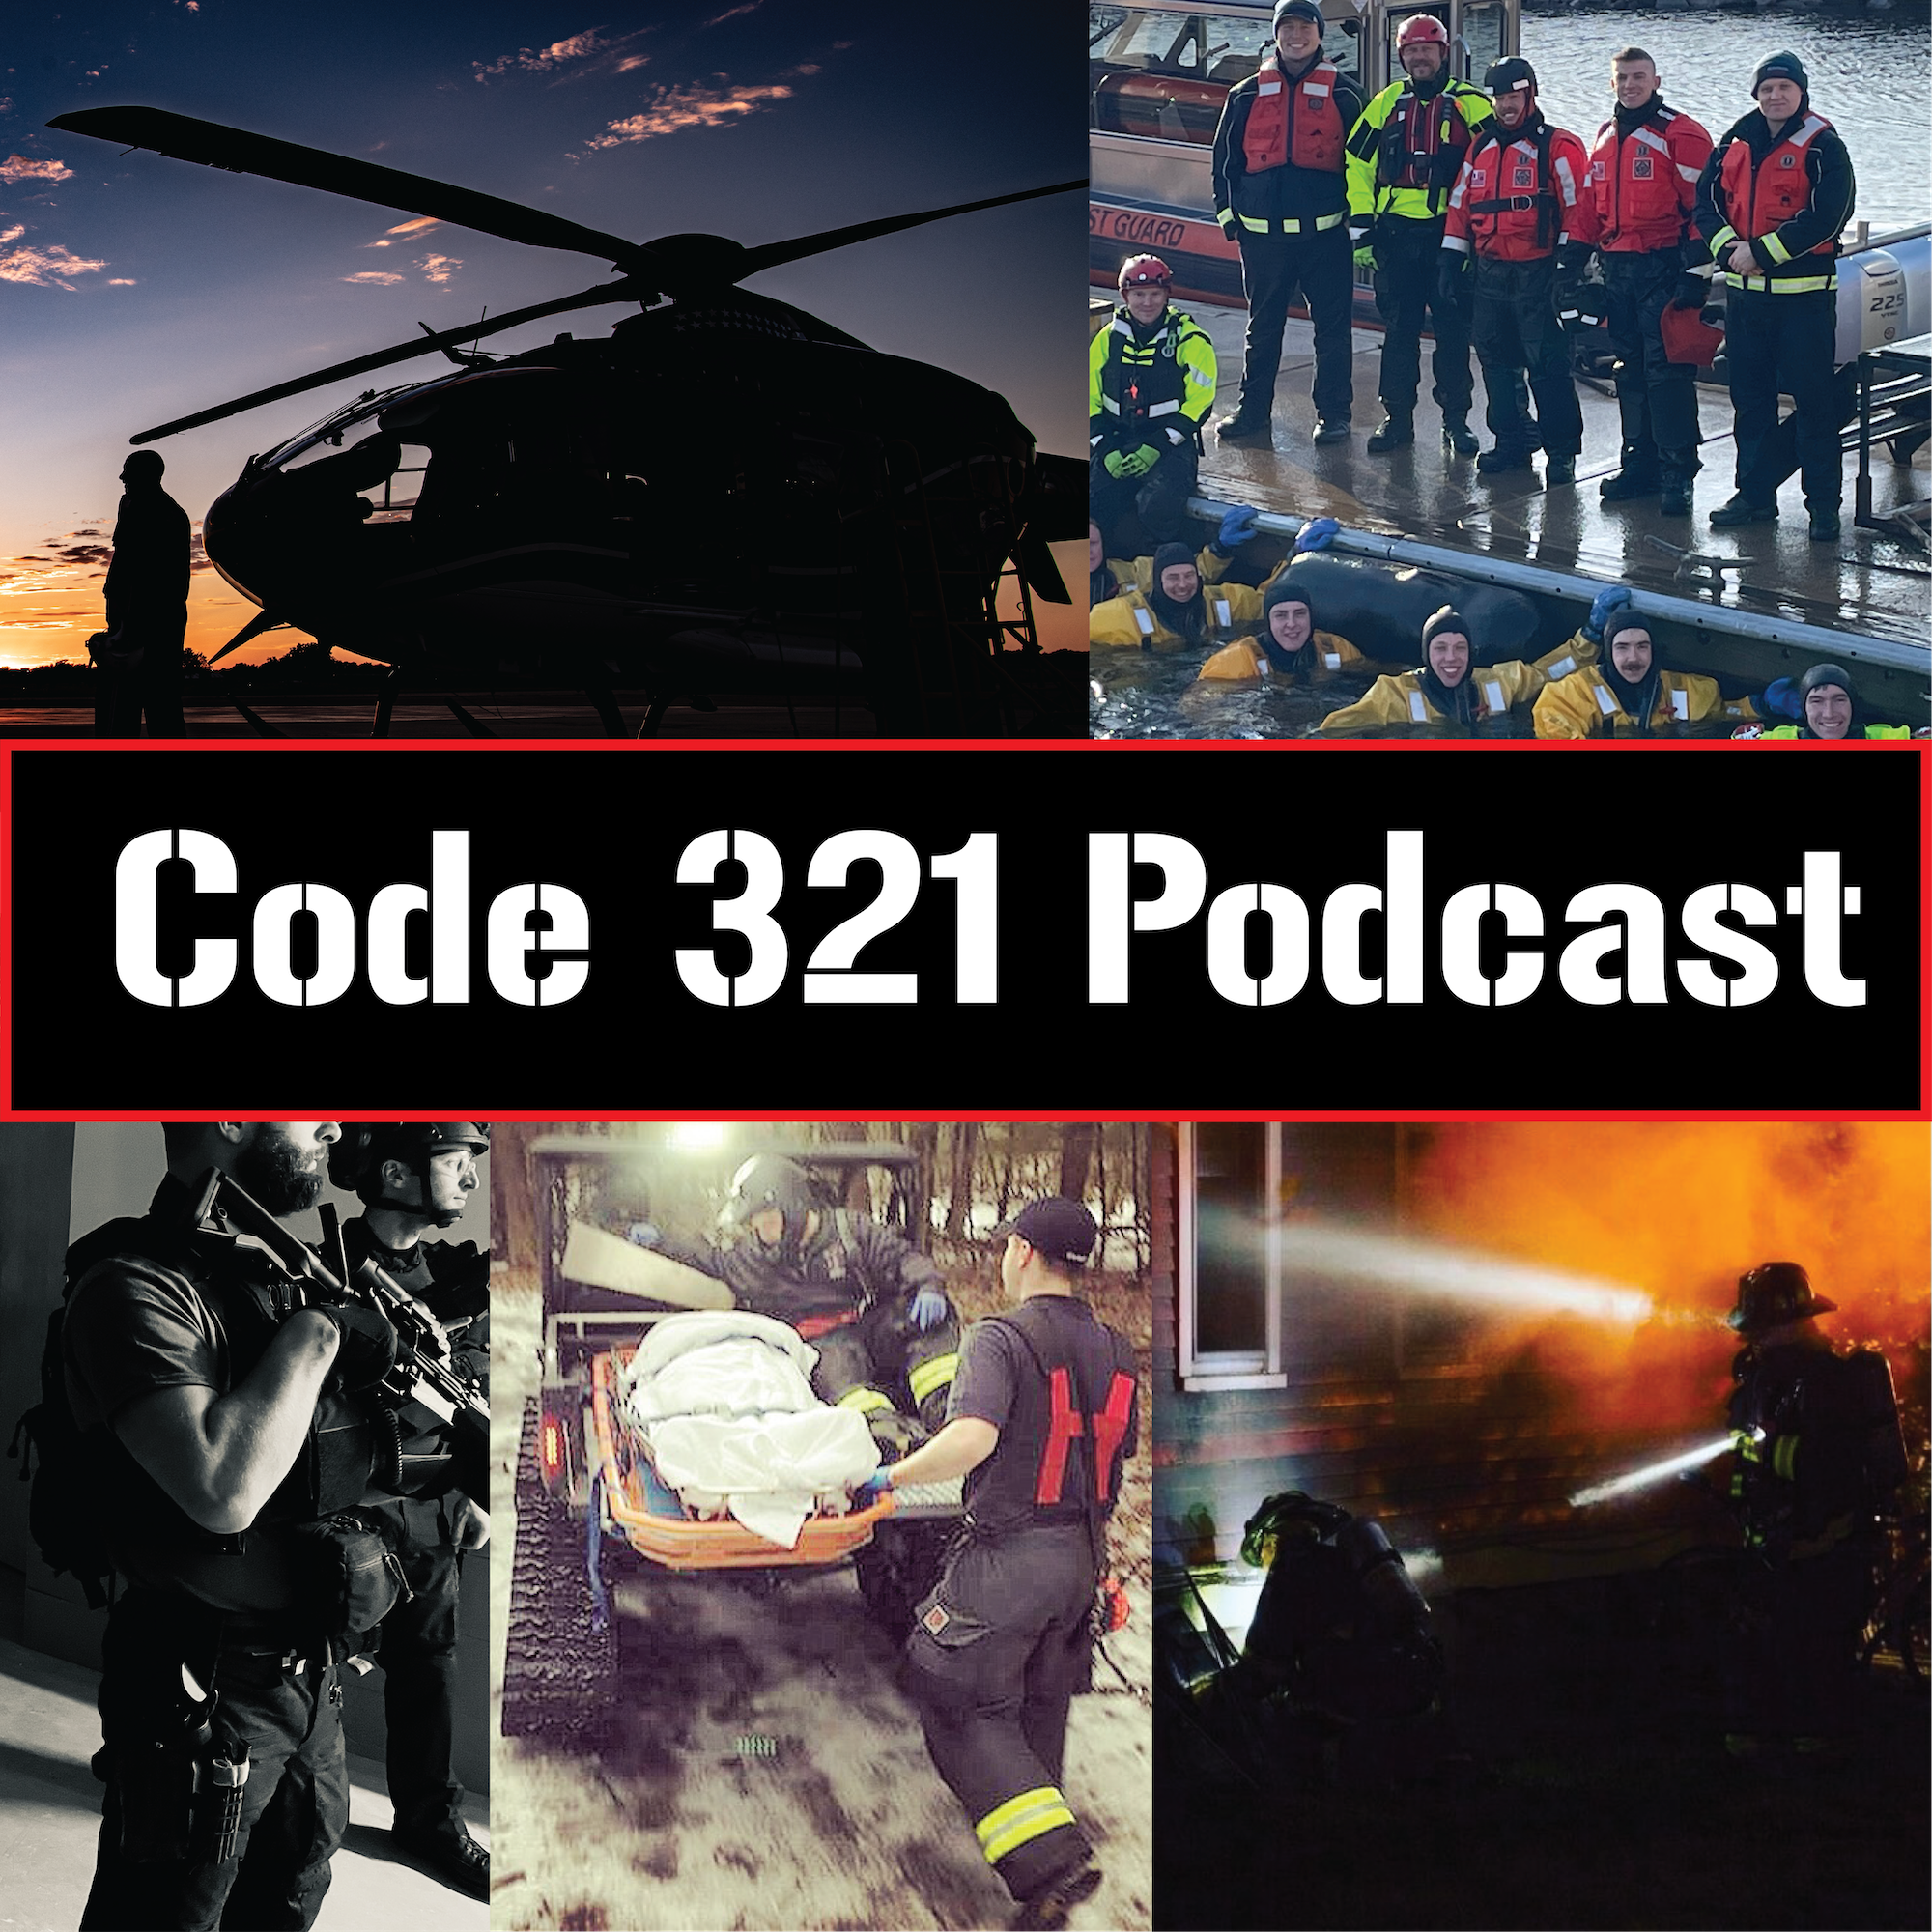 Code 321 Podcast Trailer